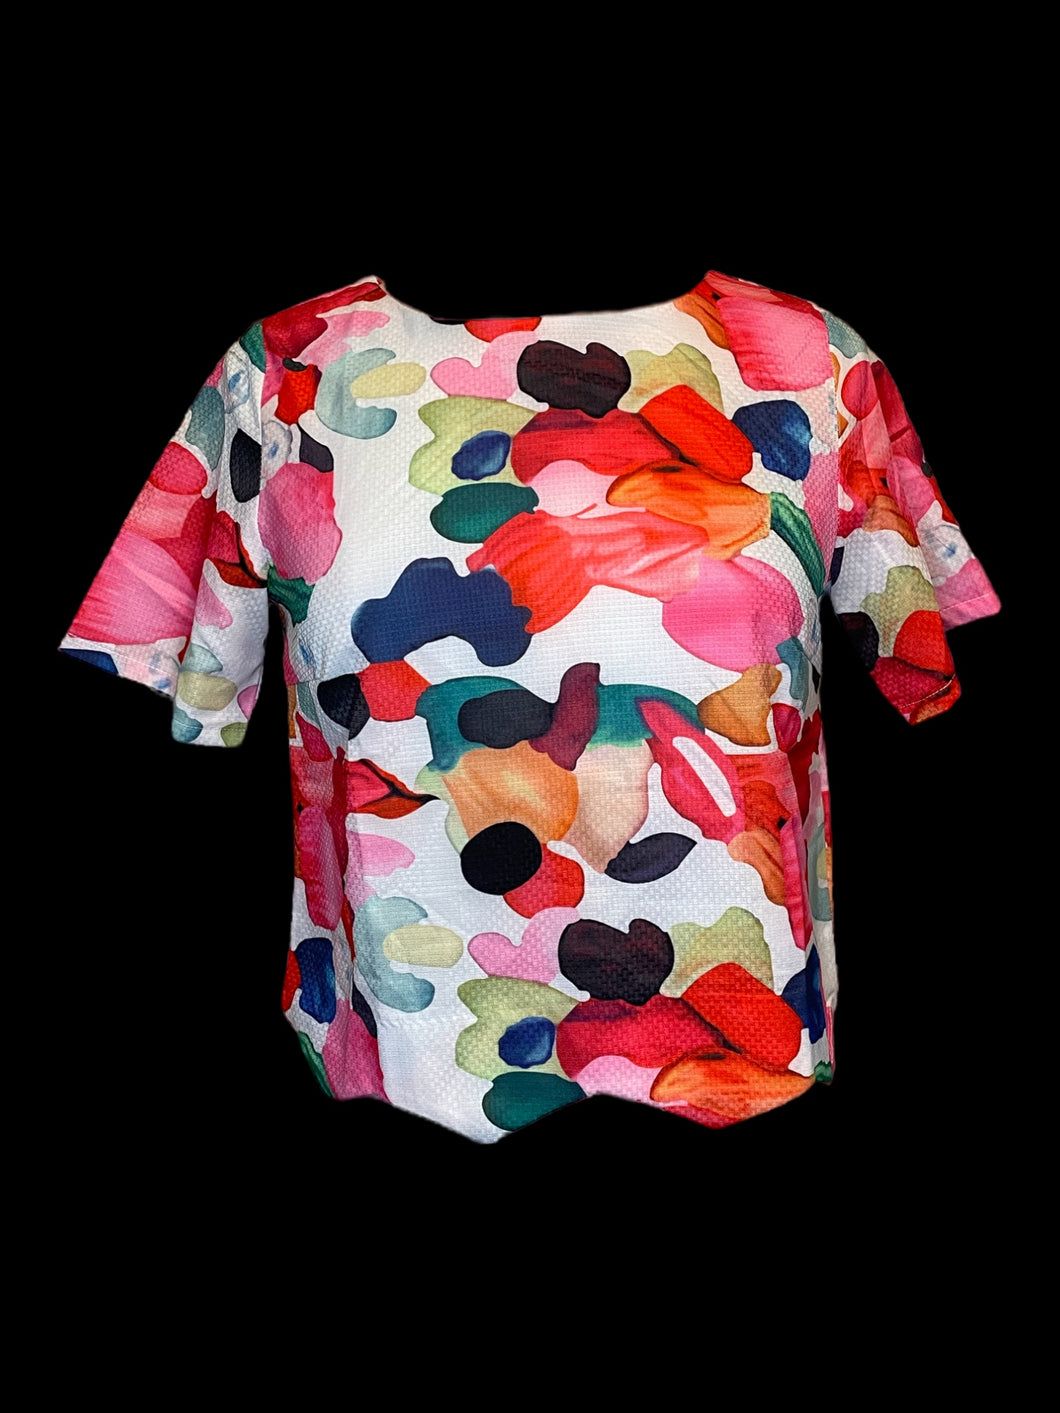 M White & multicolor abstract pattern short sleeve scoop neck top w/ chevron hem, textured fabric, & zipper closure